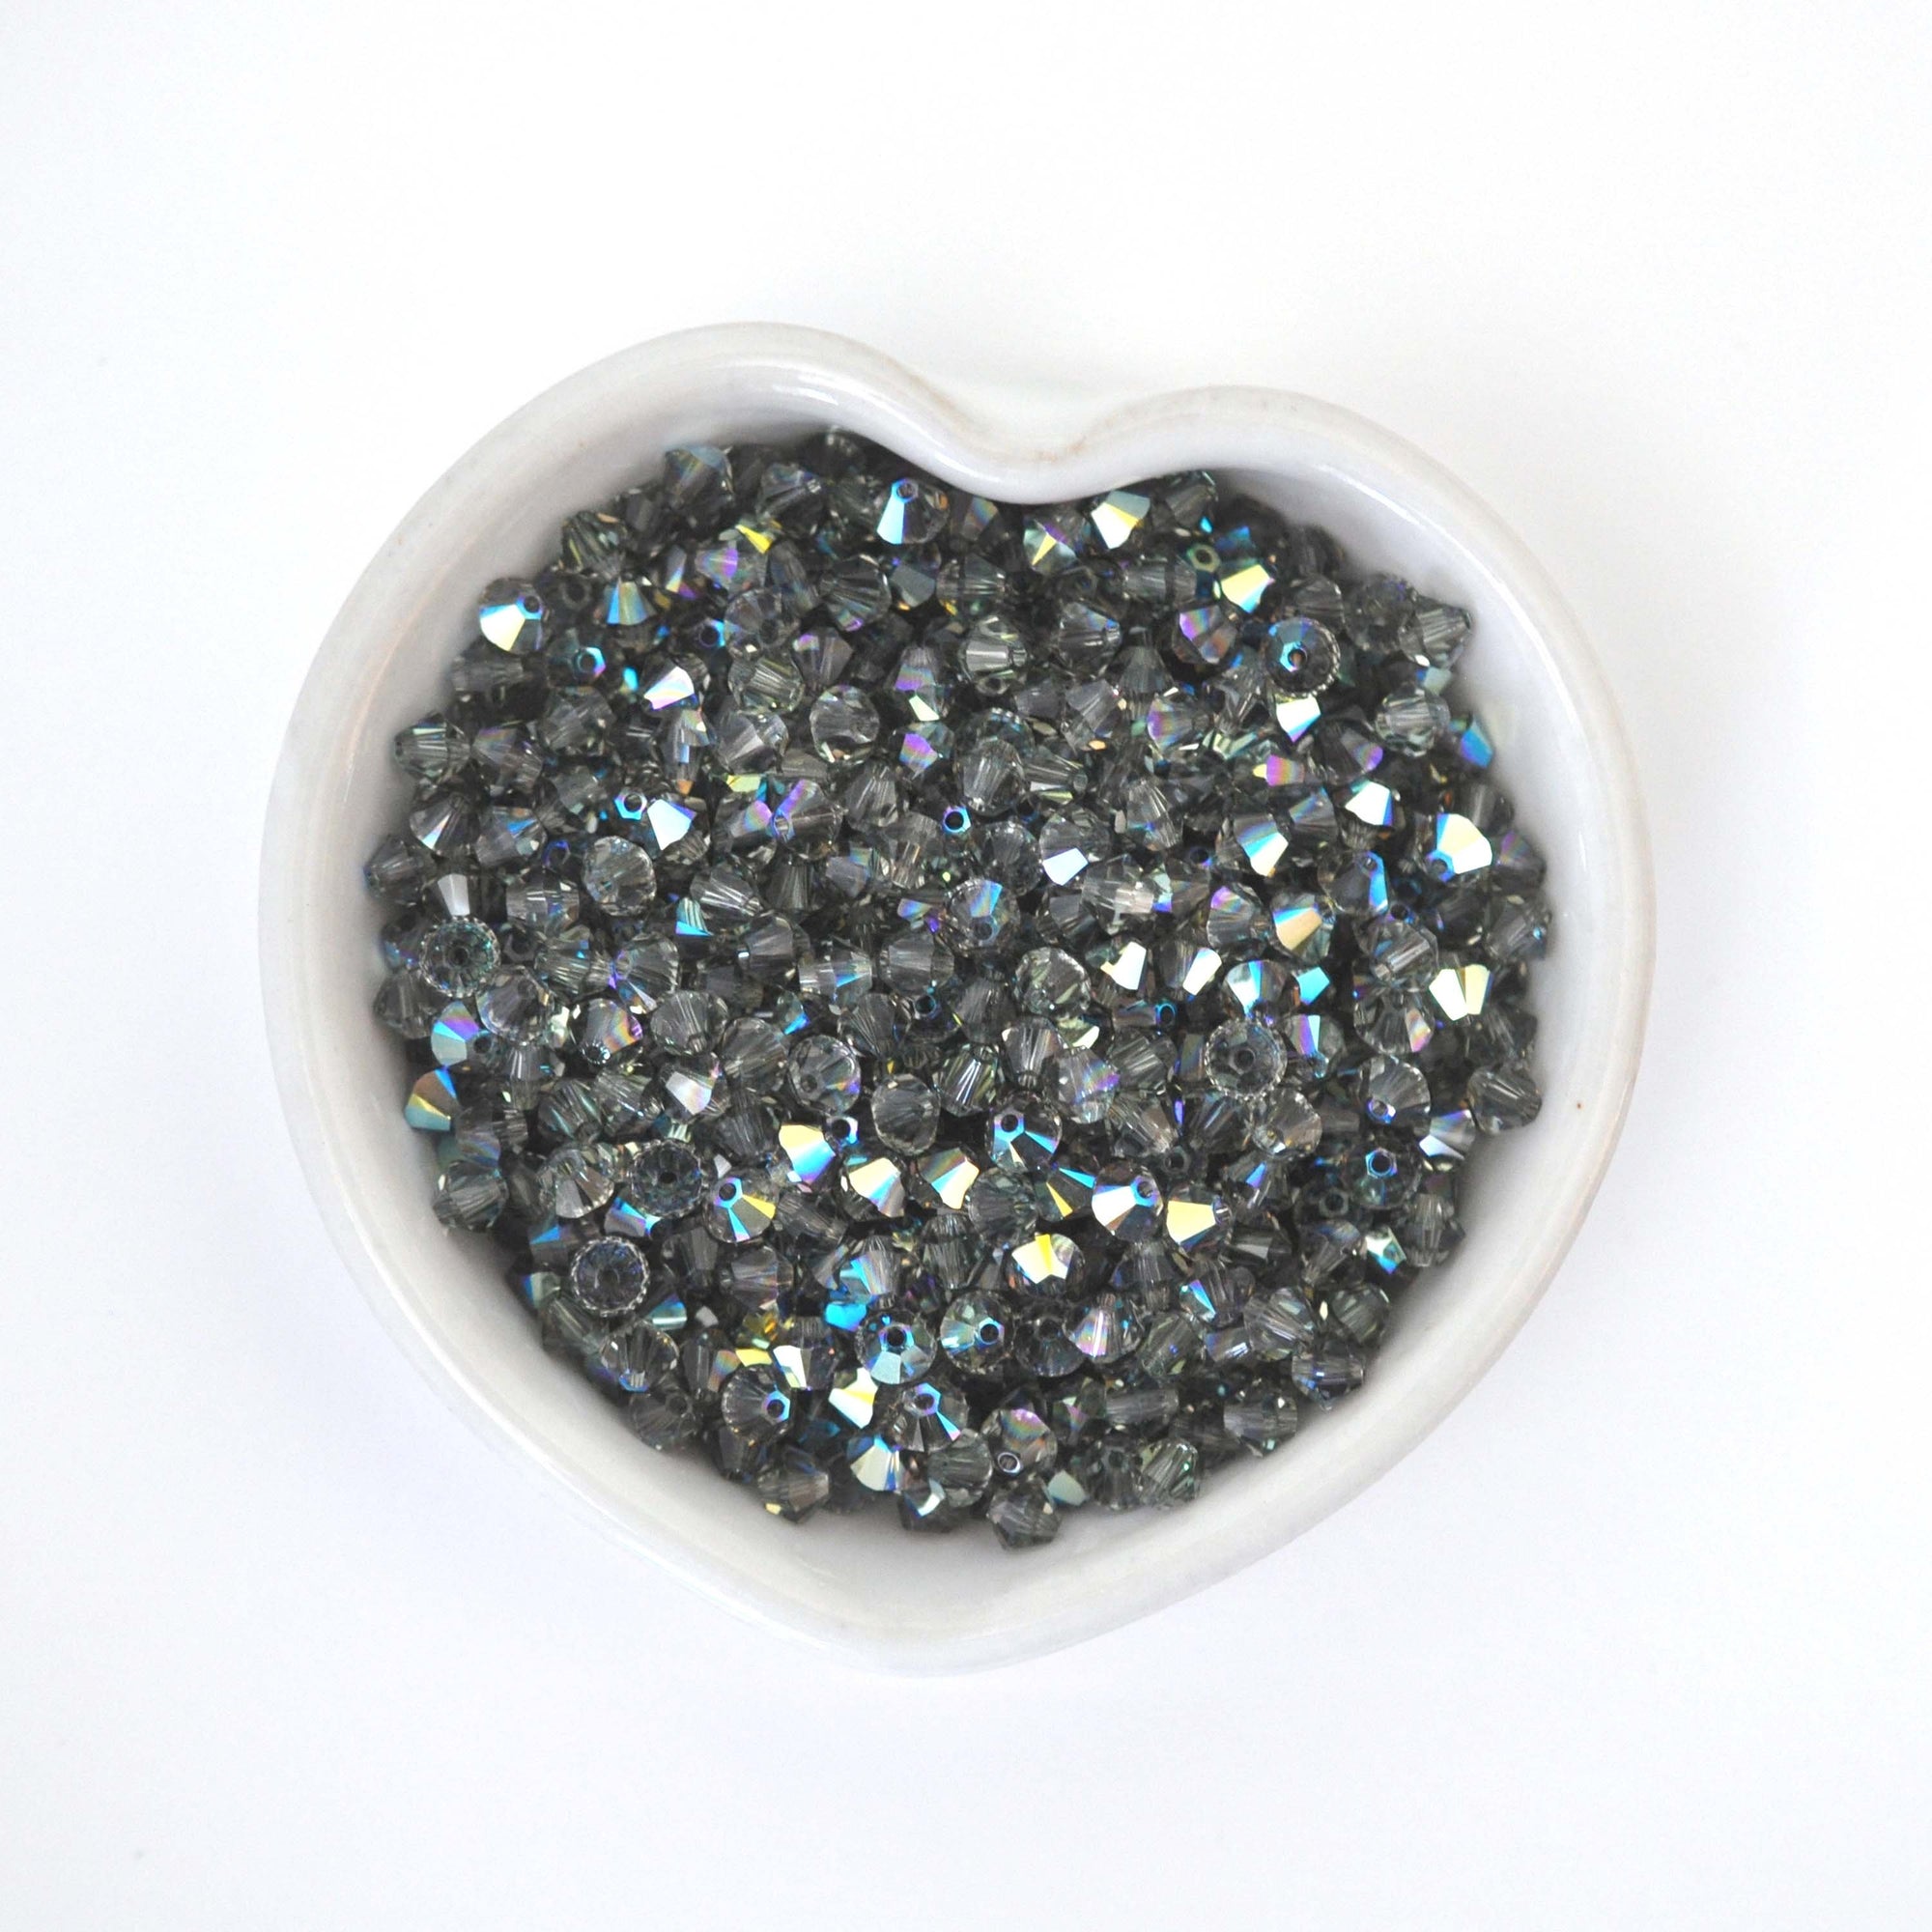 Black Diamond AB Bicone Beads 5328 Barton Crystal 4mm